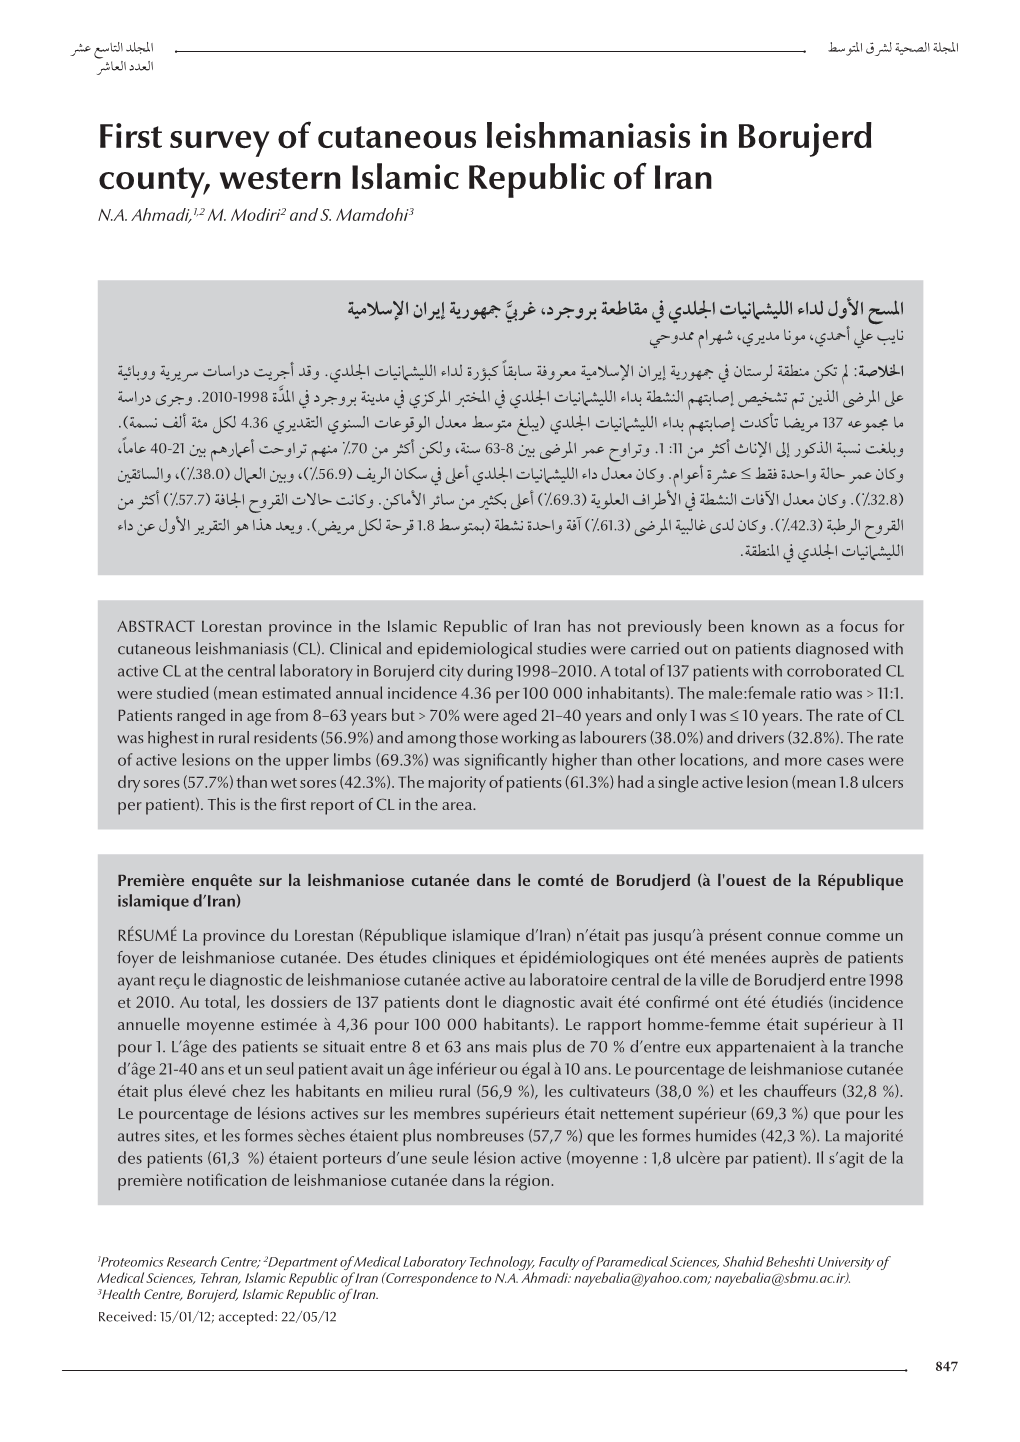 First Survey of Cutaneous Leishmaniasis in Borujerd County, Western Islamic Republic of Iran N.A